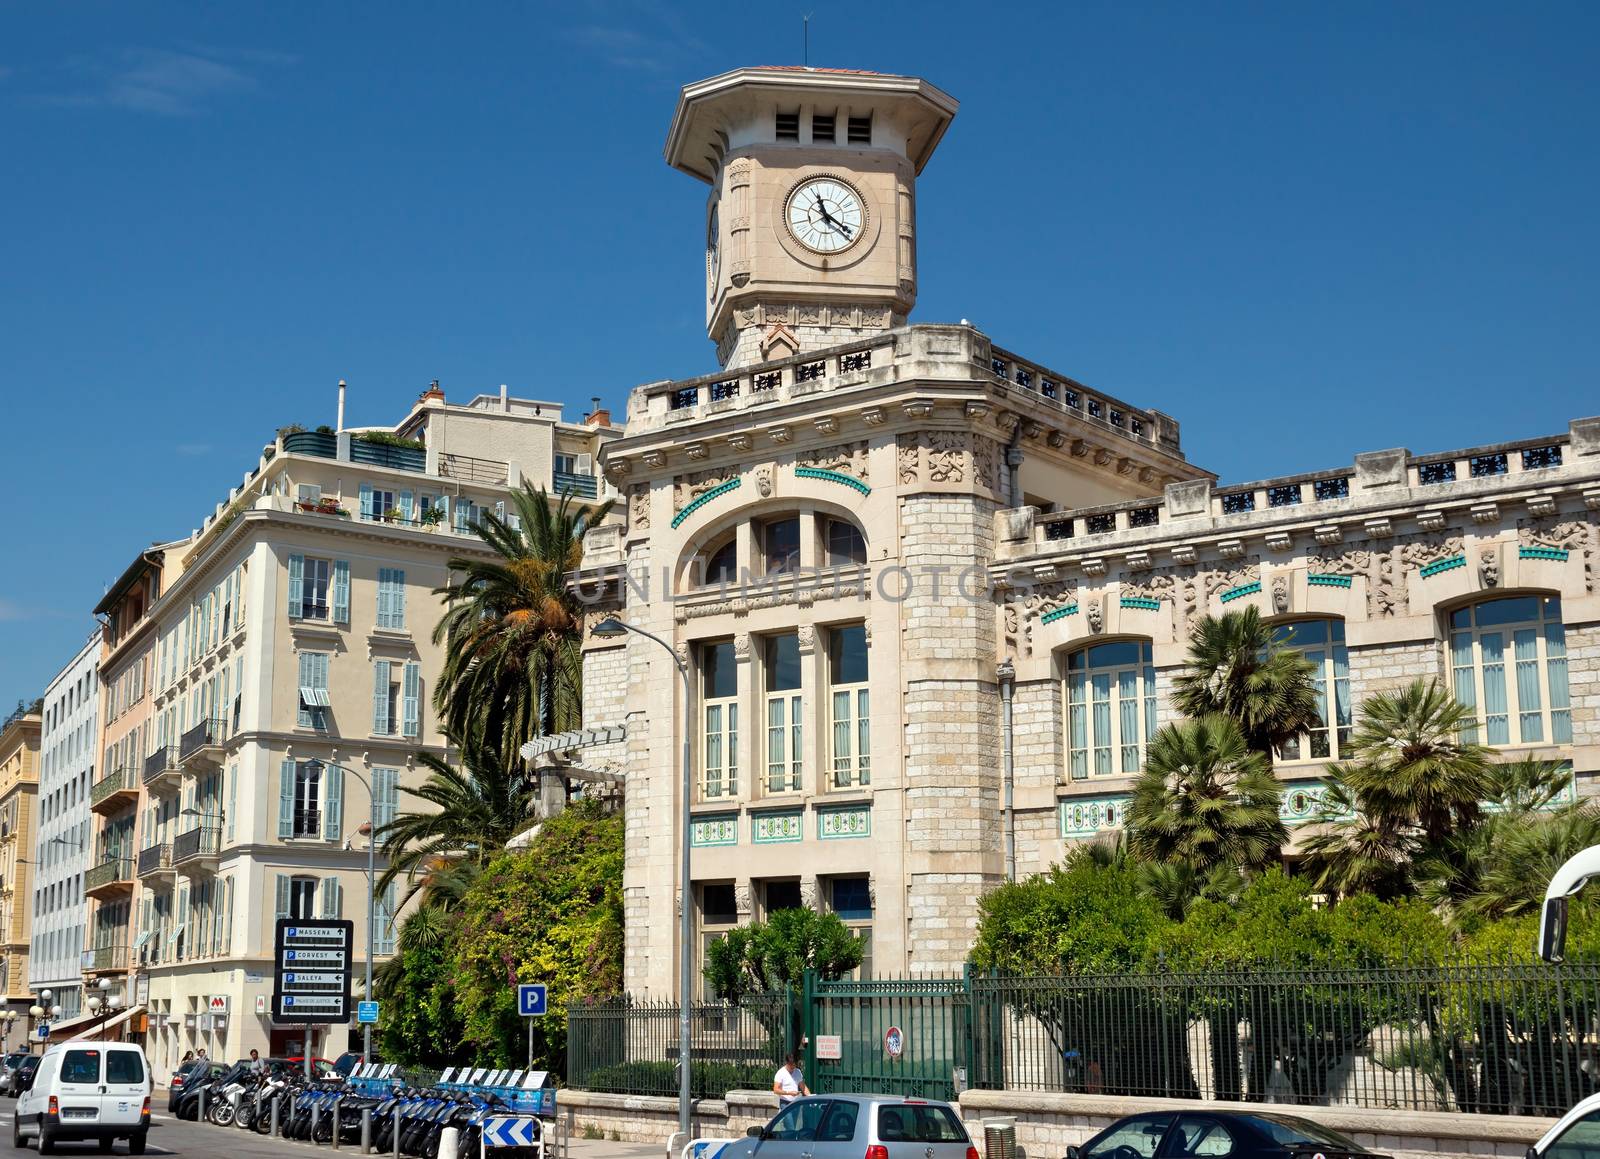 City of Nice - Architecture along Promenade des Anglais by Venakr